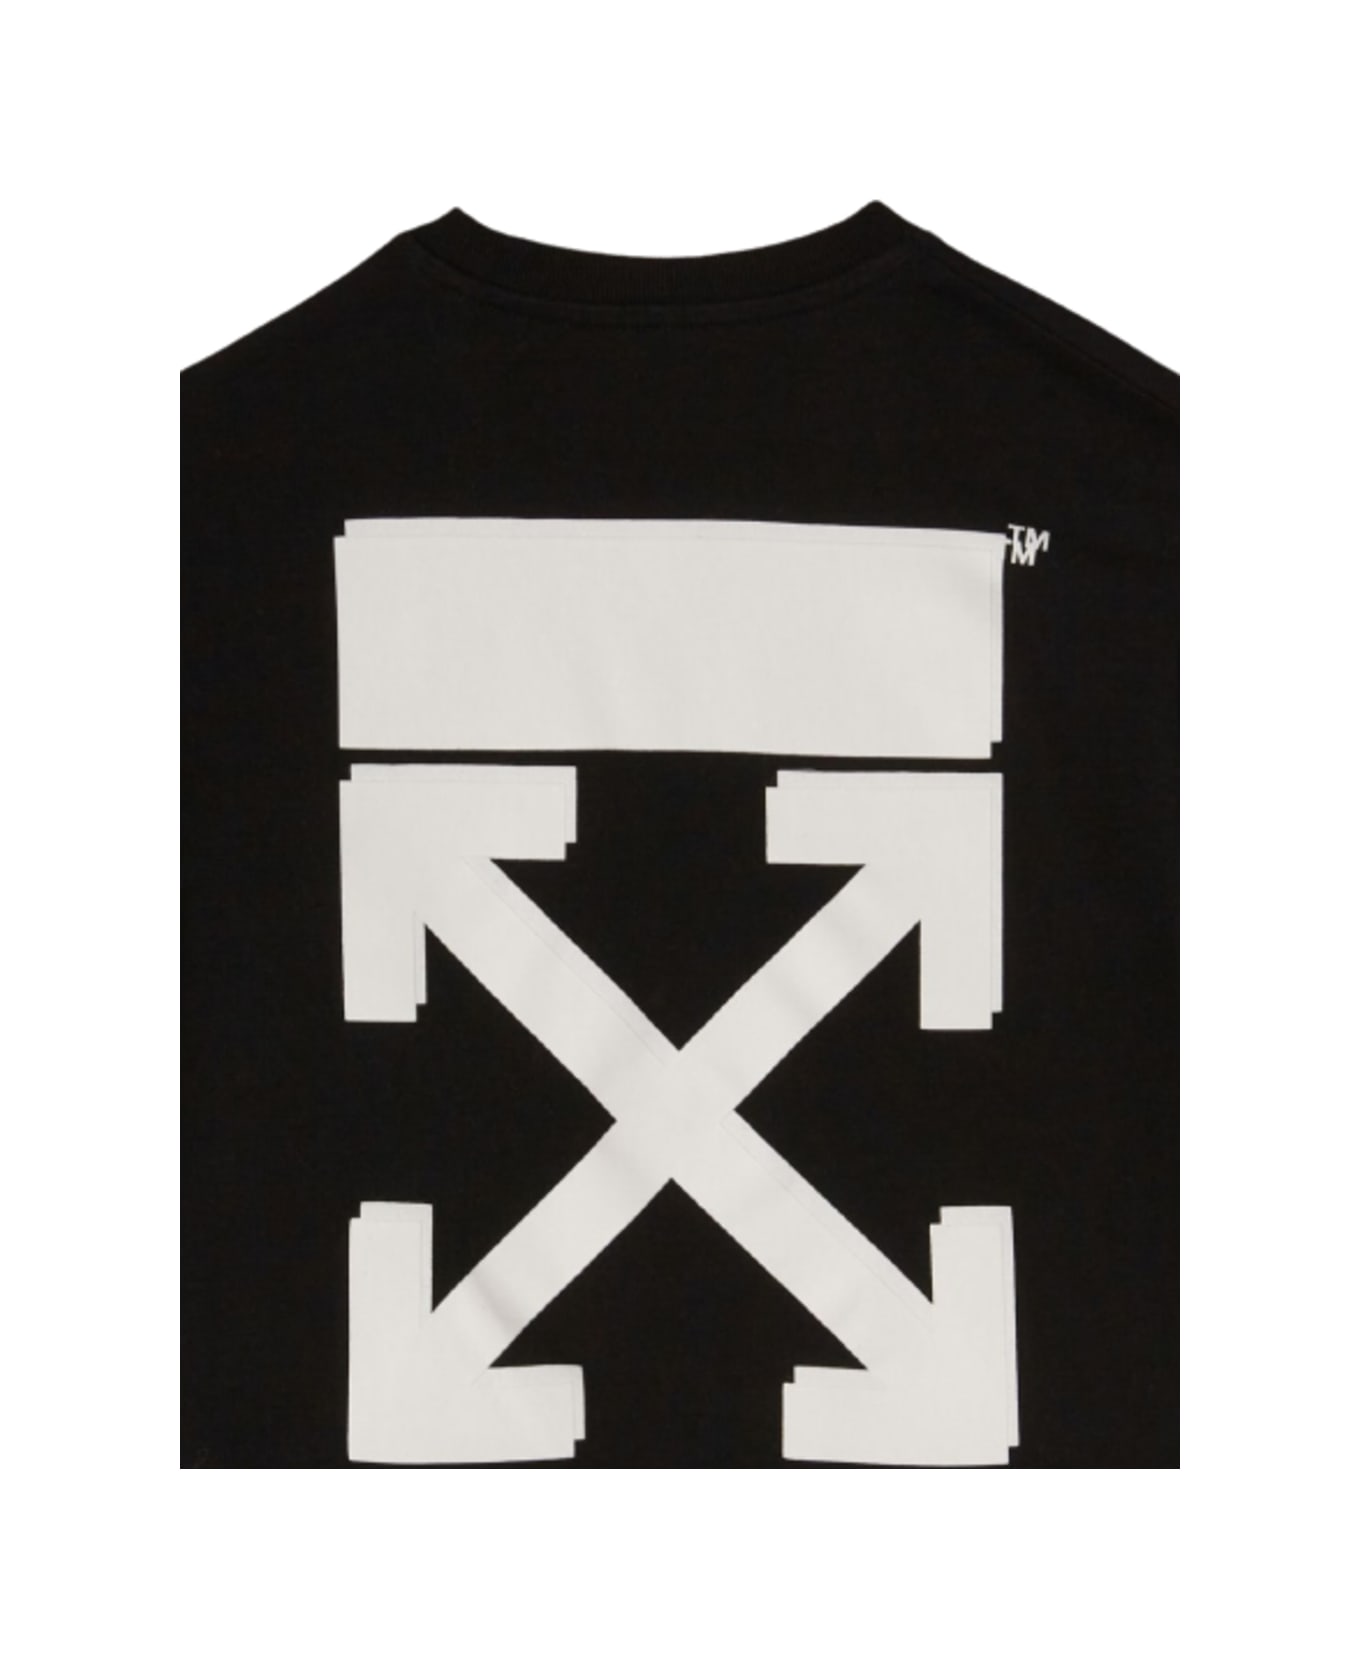 Off-White T-shirt Stampa Arrow In Cotone Nero Bambino Off White Kids - Black